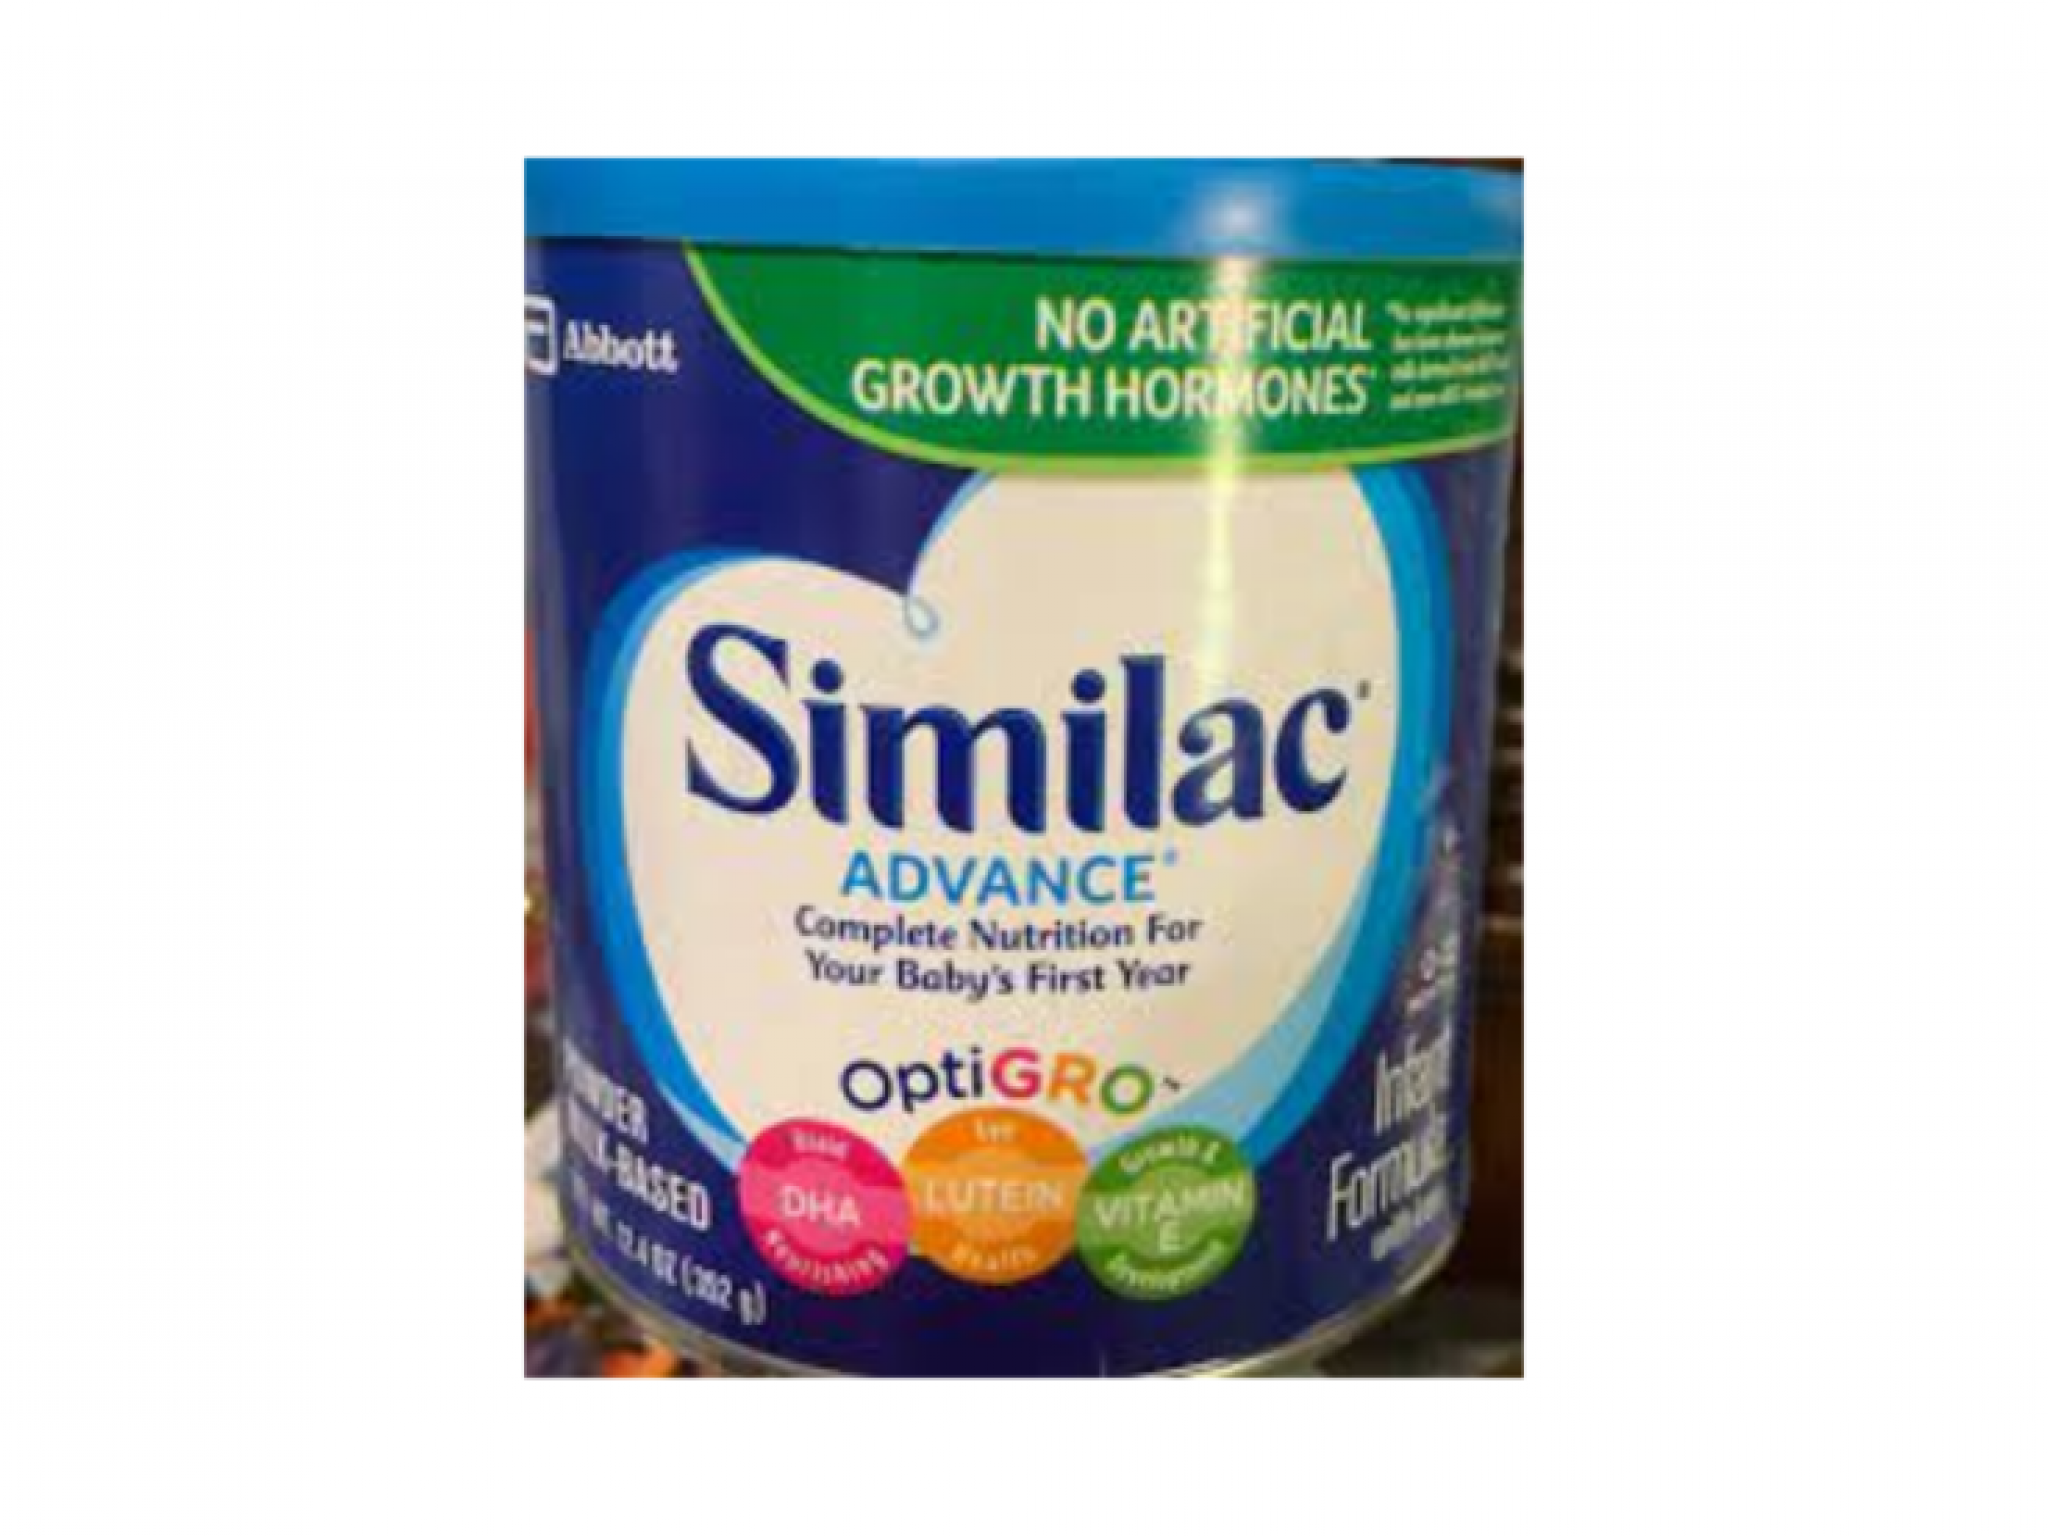  similac-baby-formula-maker-abbott-and-reckitt-face-hundreds-of-baby-formula-lawsuits 